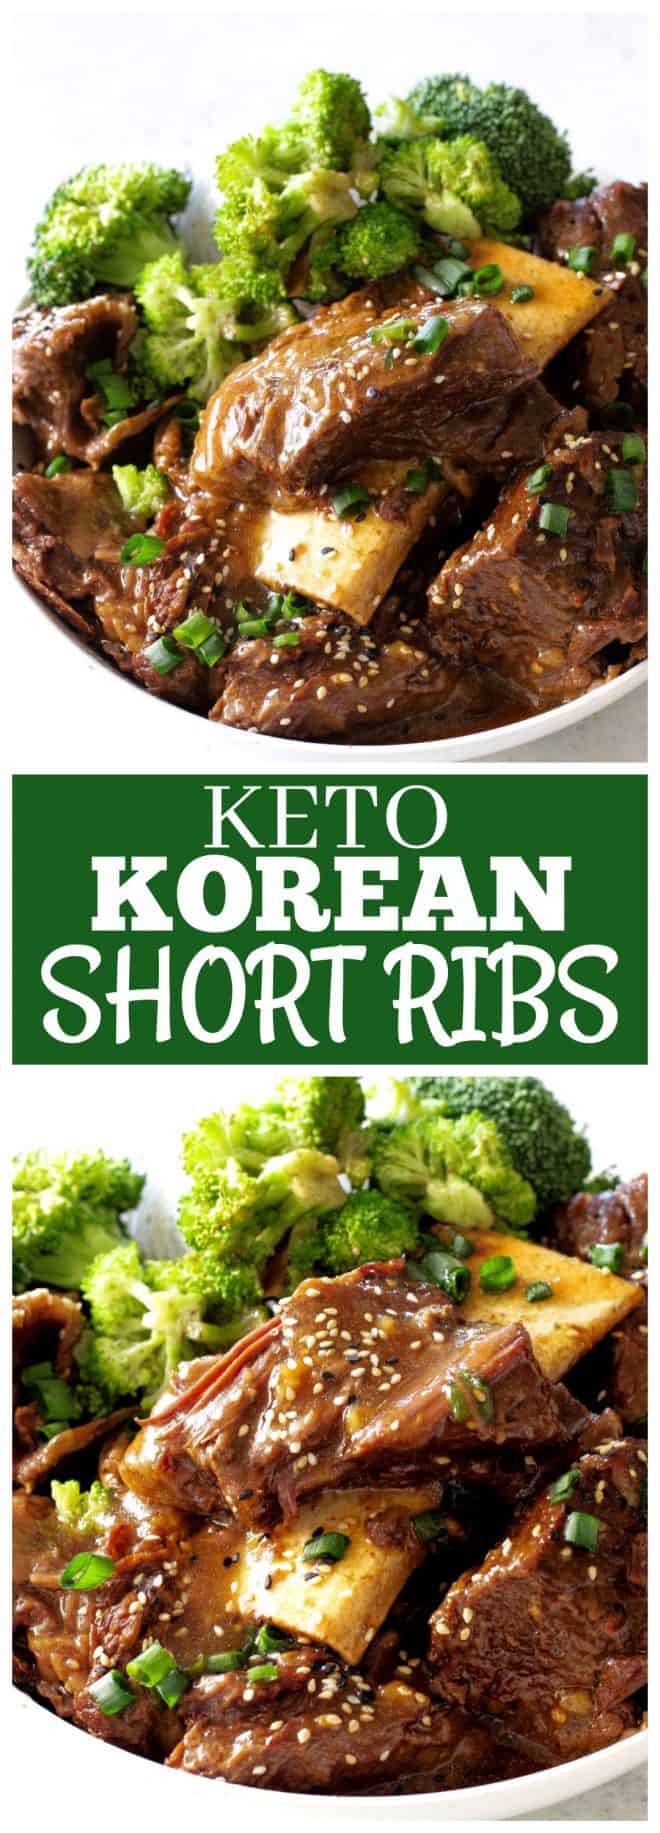 fb image - Keto Korean Short Ribs